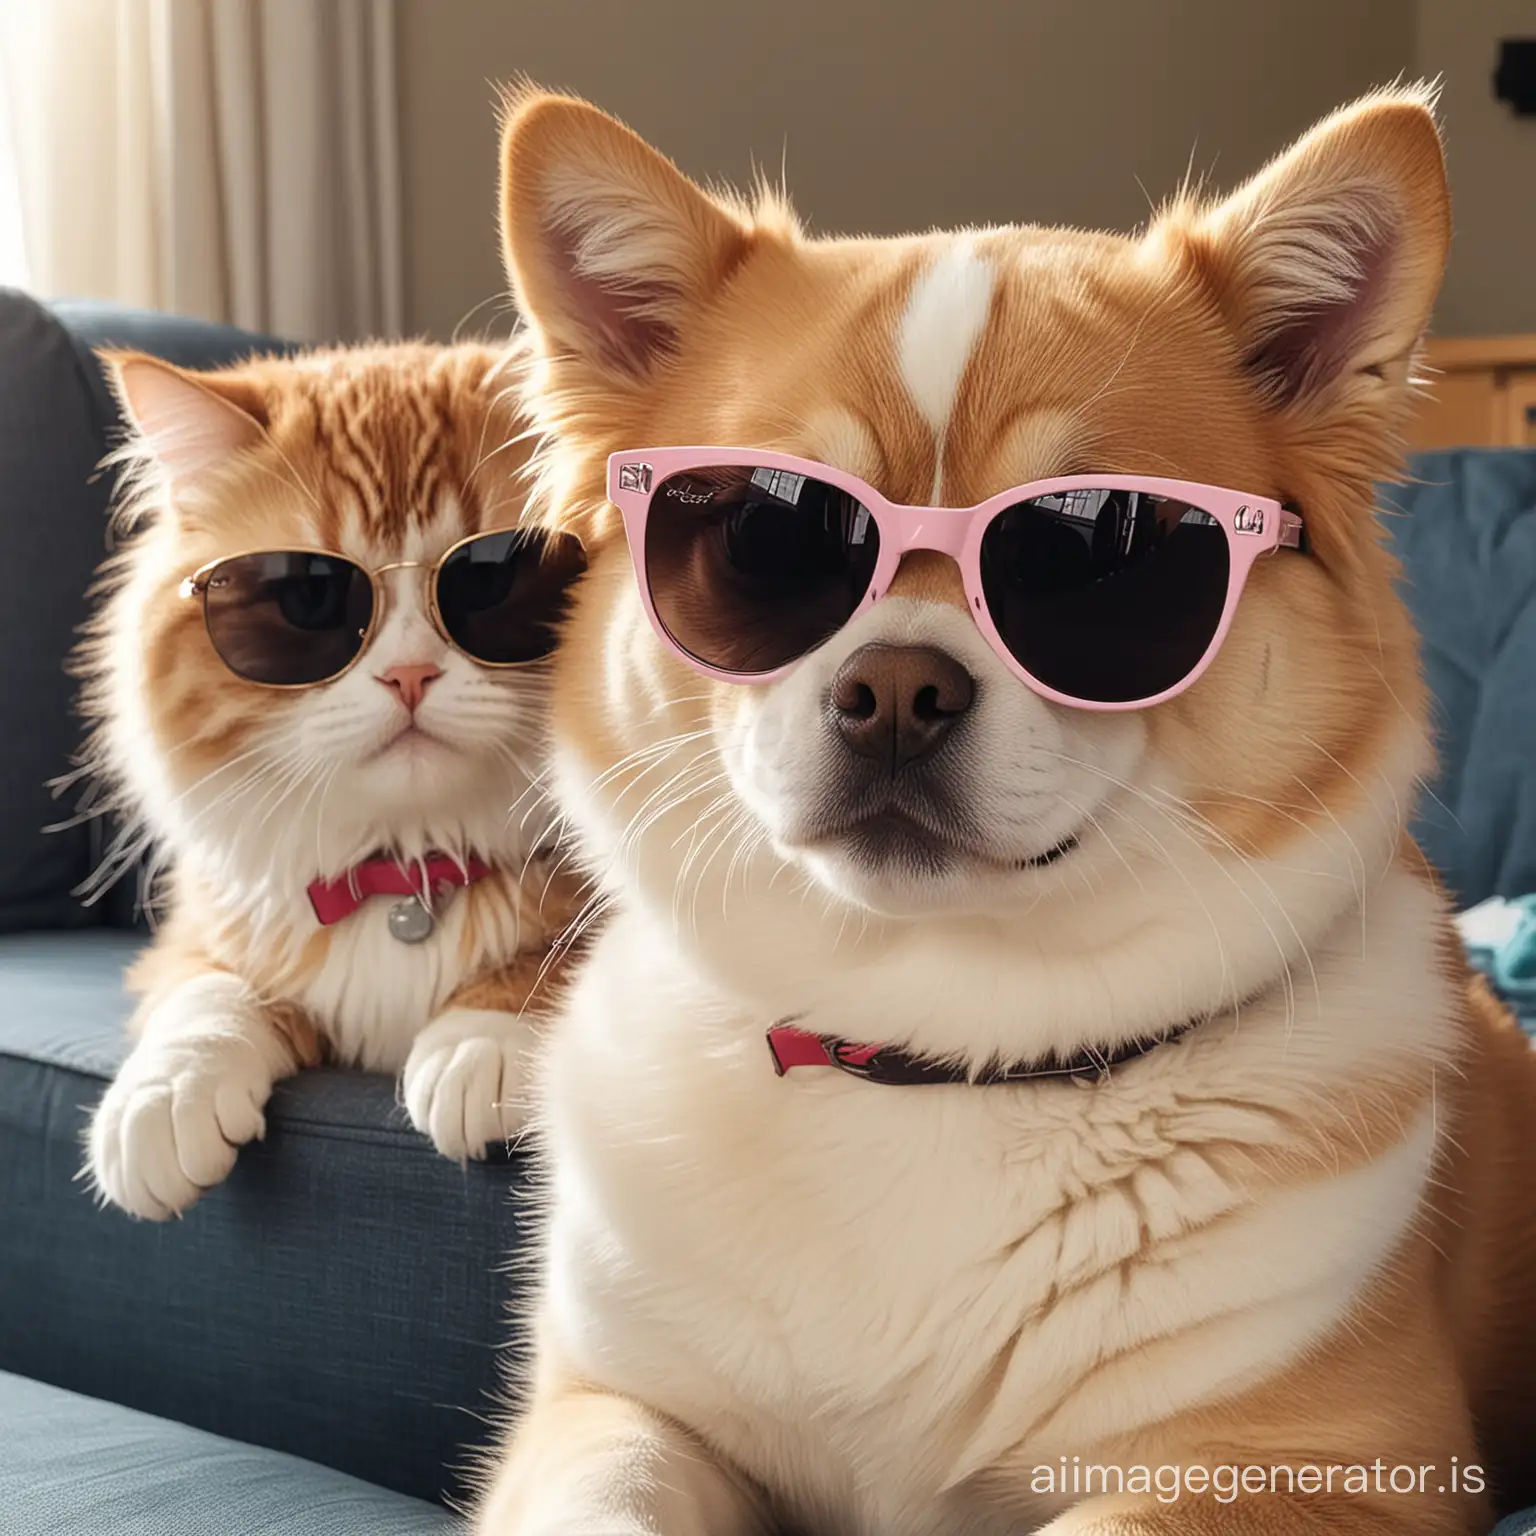 doggo and cat cute with sunglasses